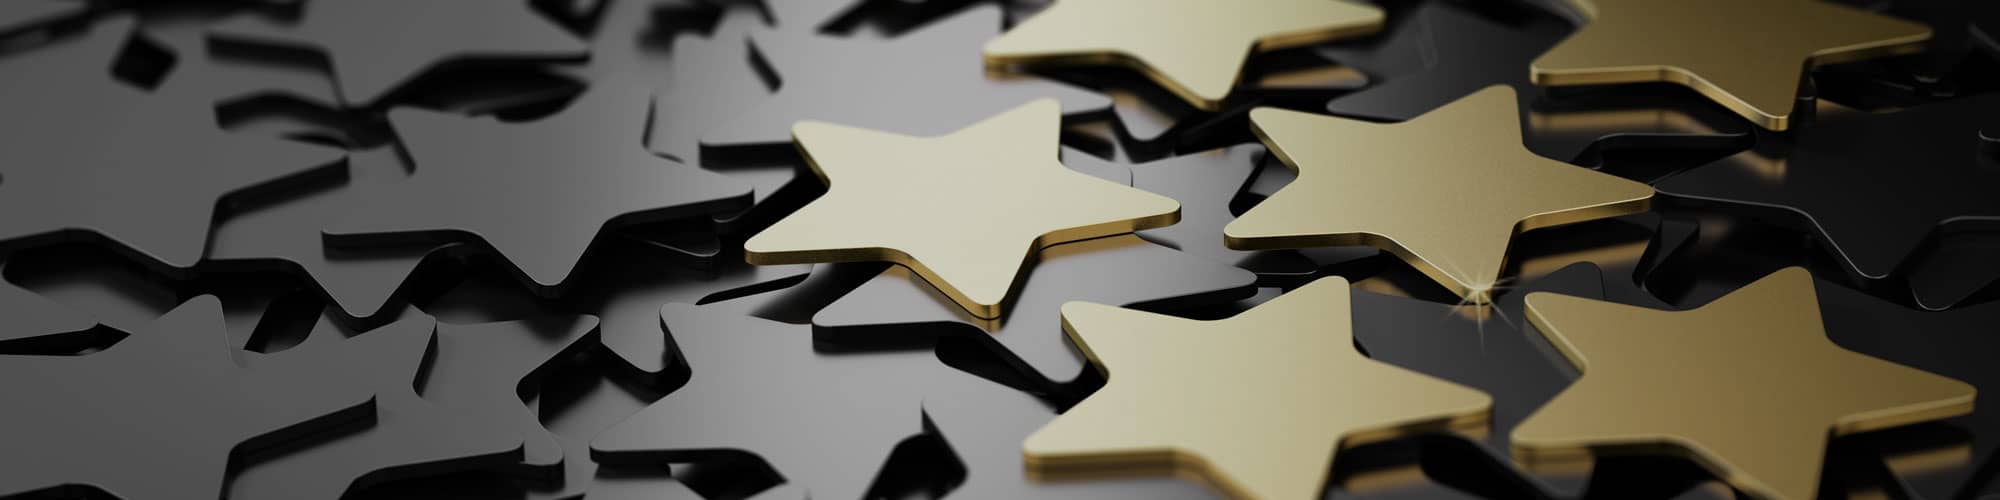 Gold star awards